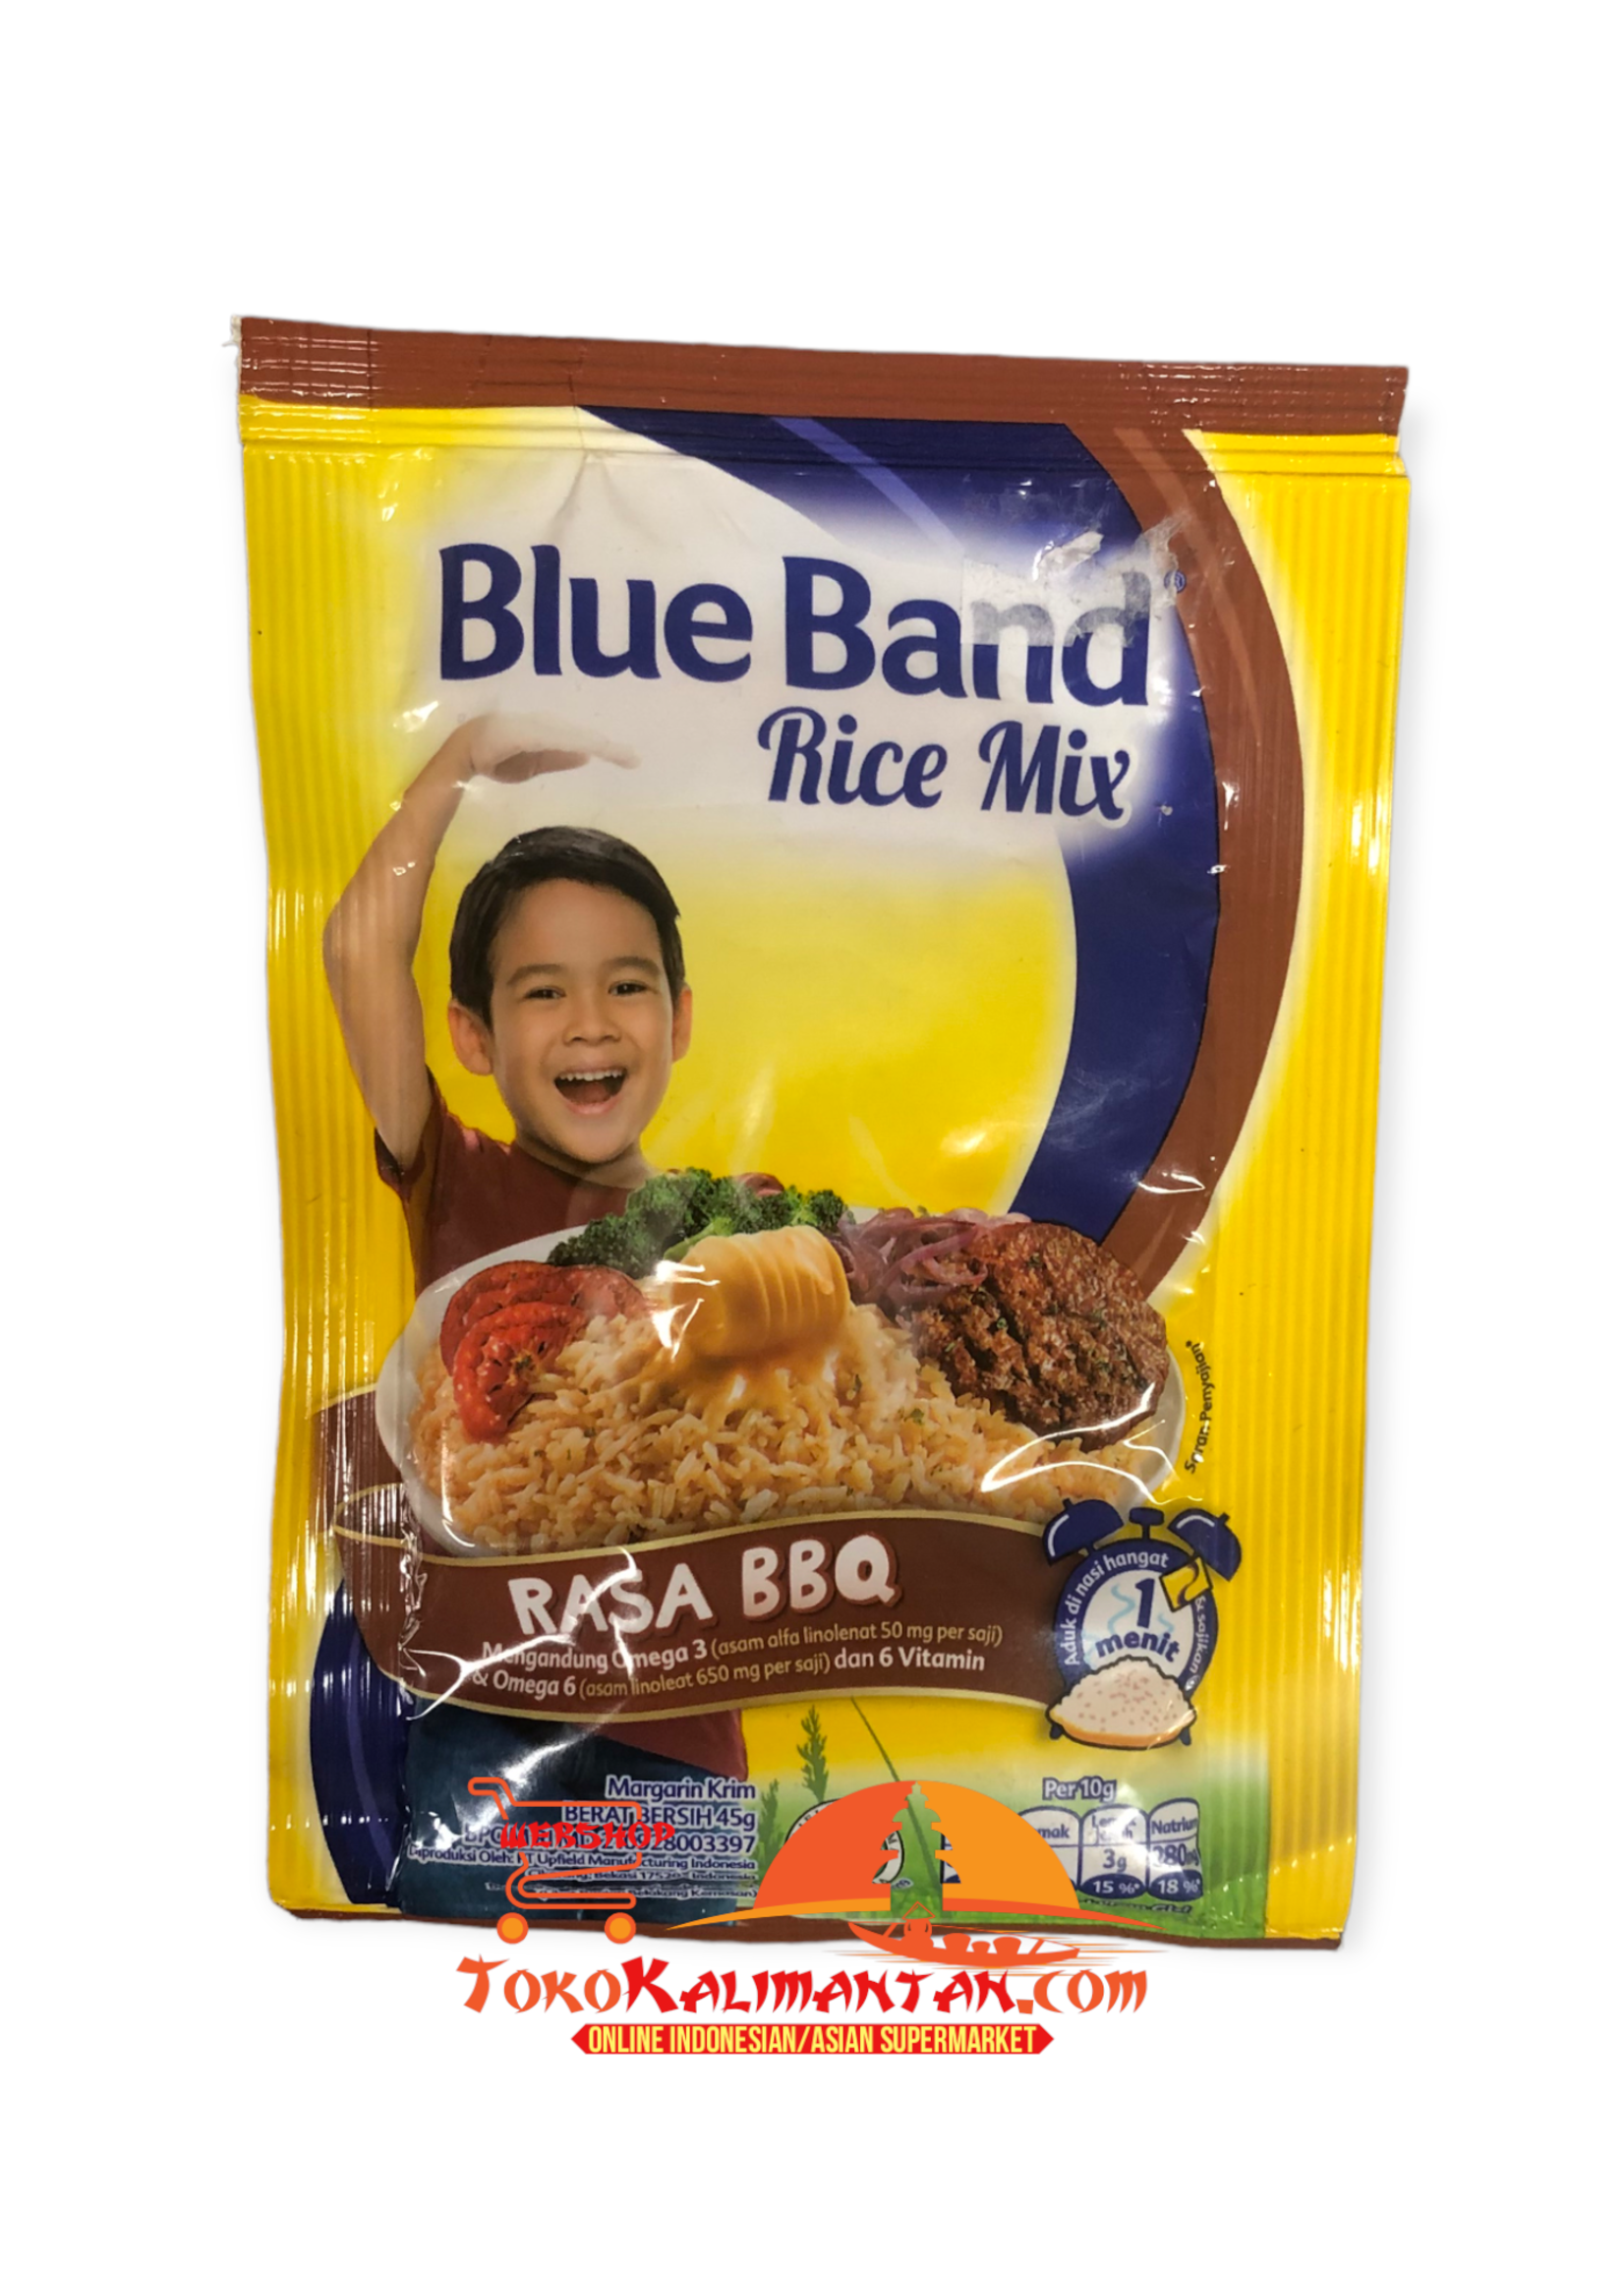 Blue Band Blue Band - rice mix rasa bbq